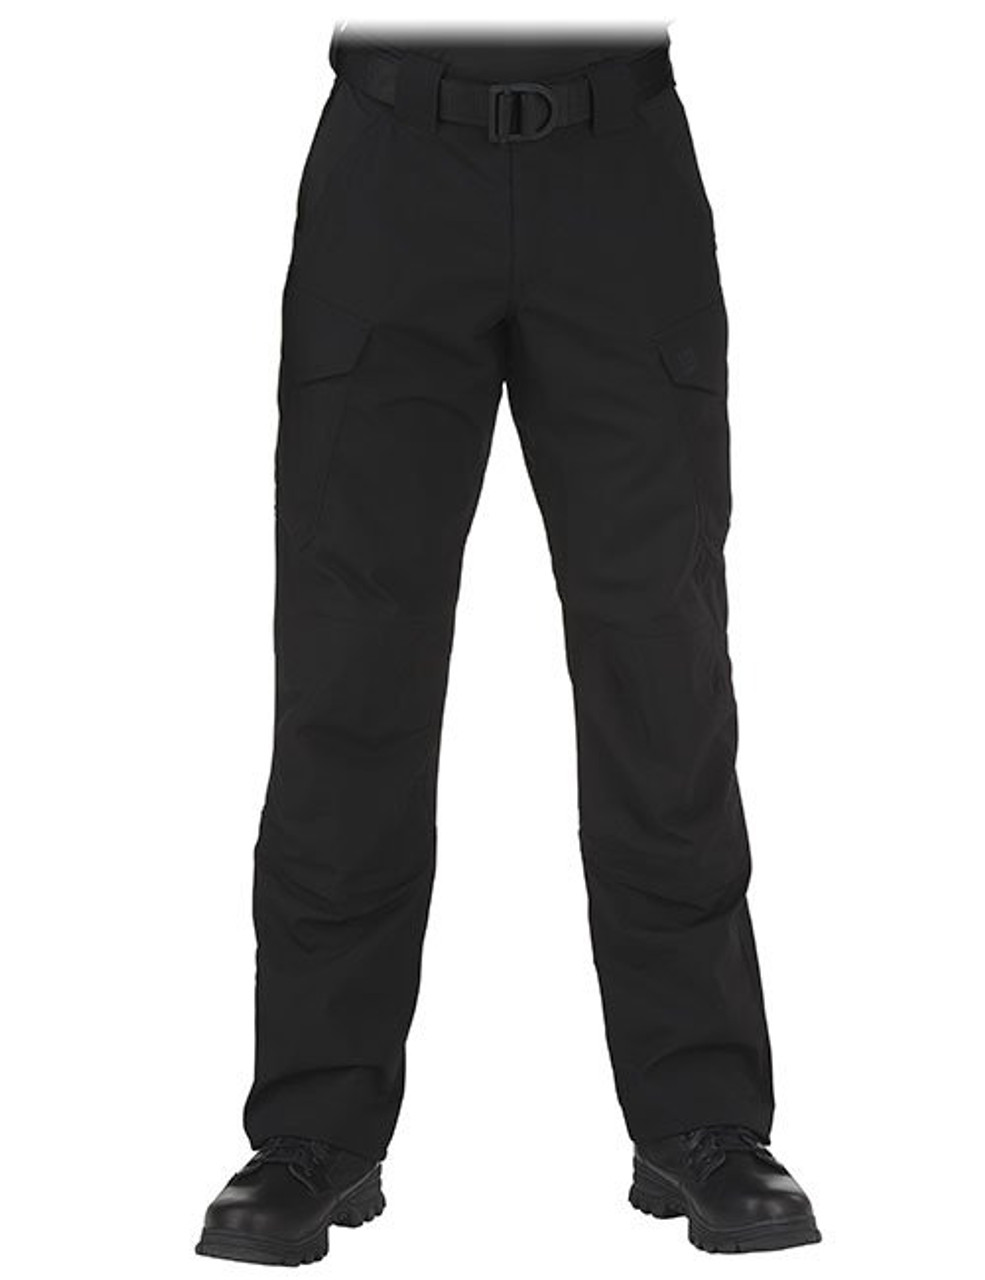 5.11® Stryke® Pant - High-Performance Tactical Pants